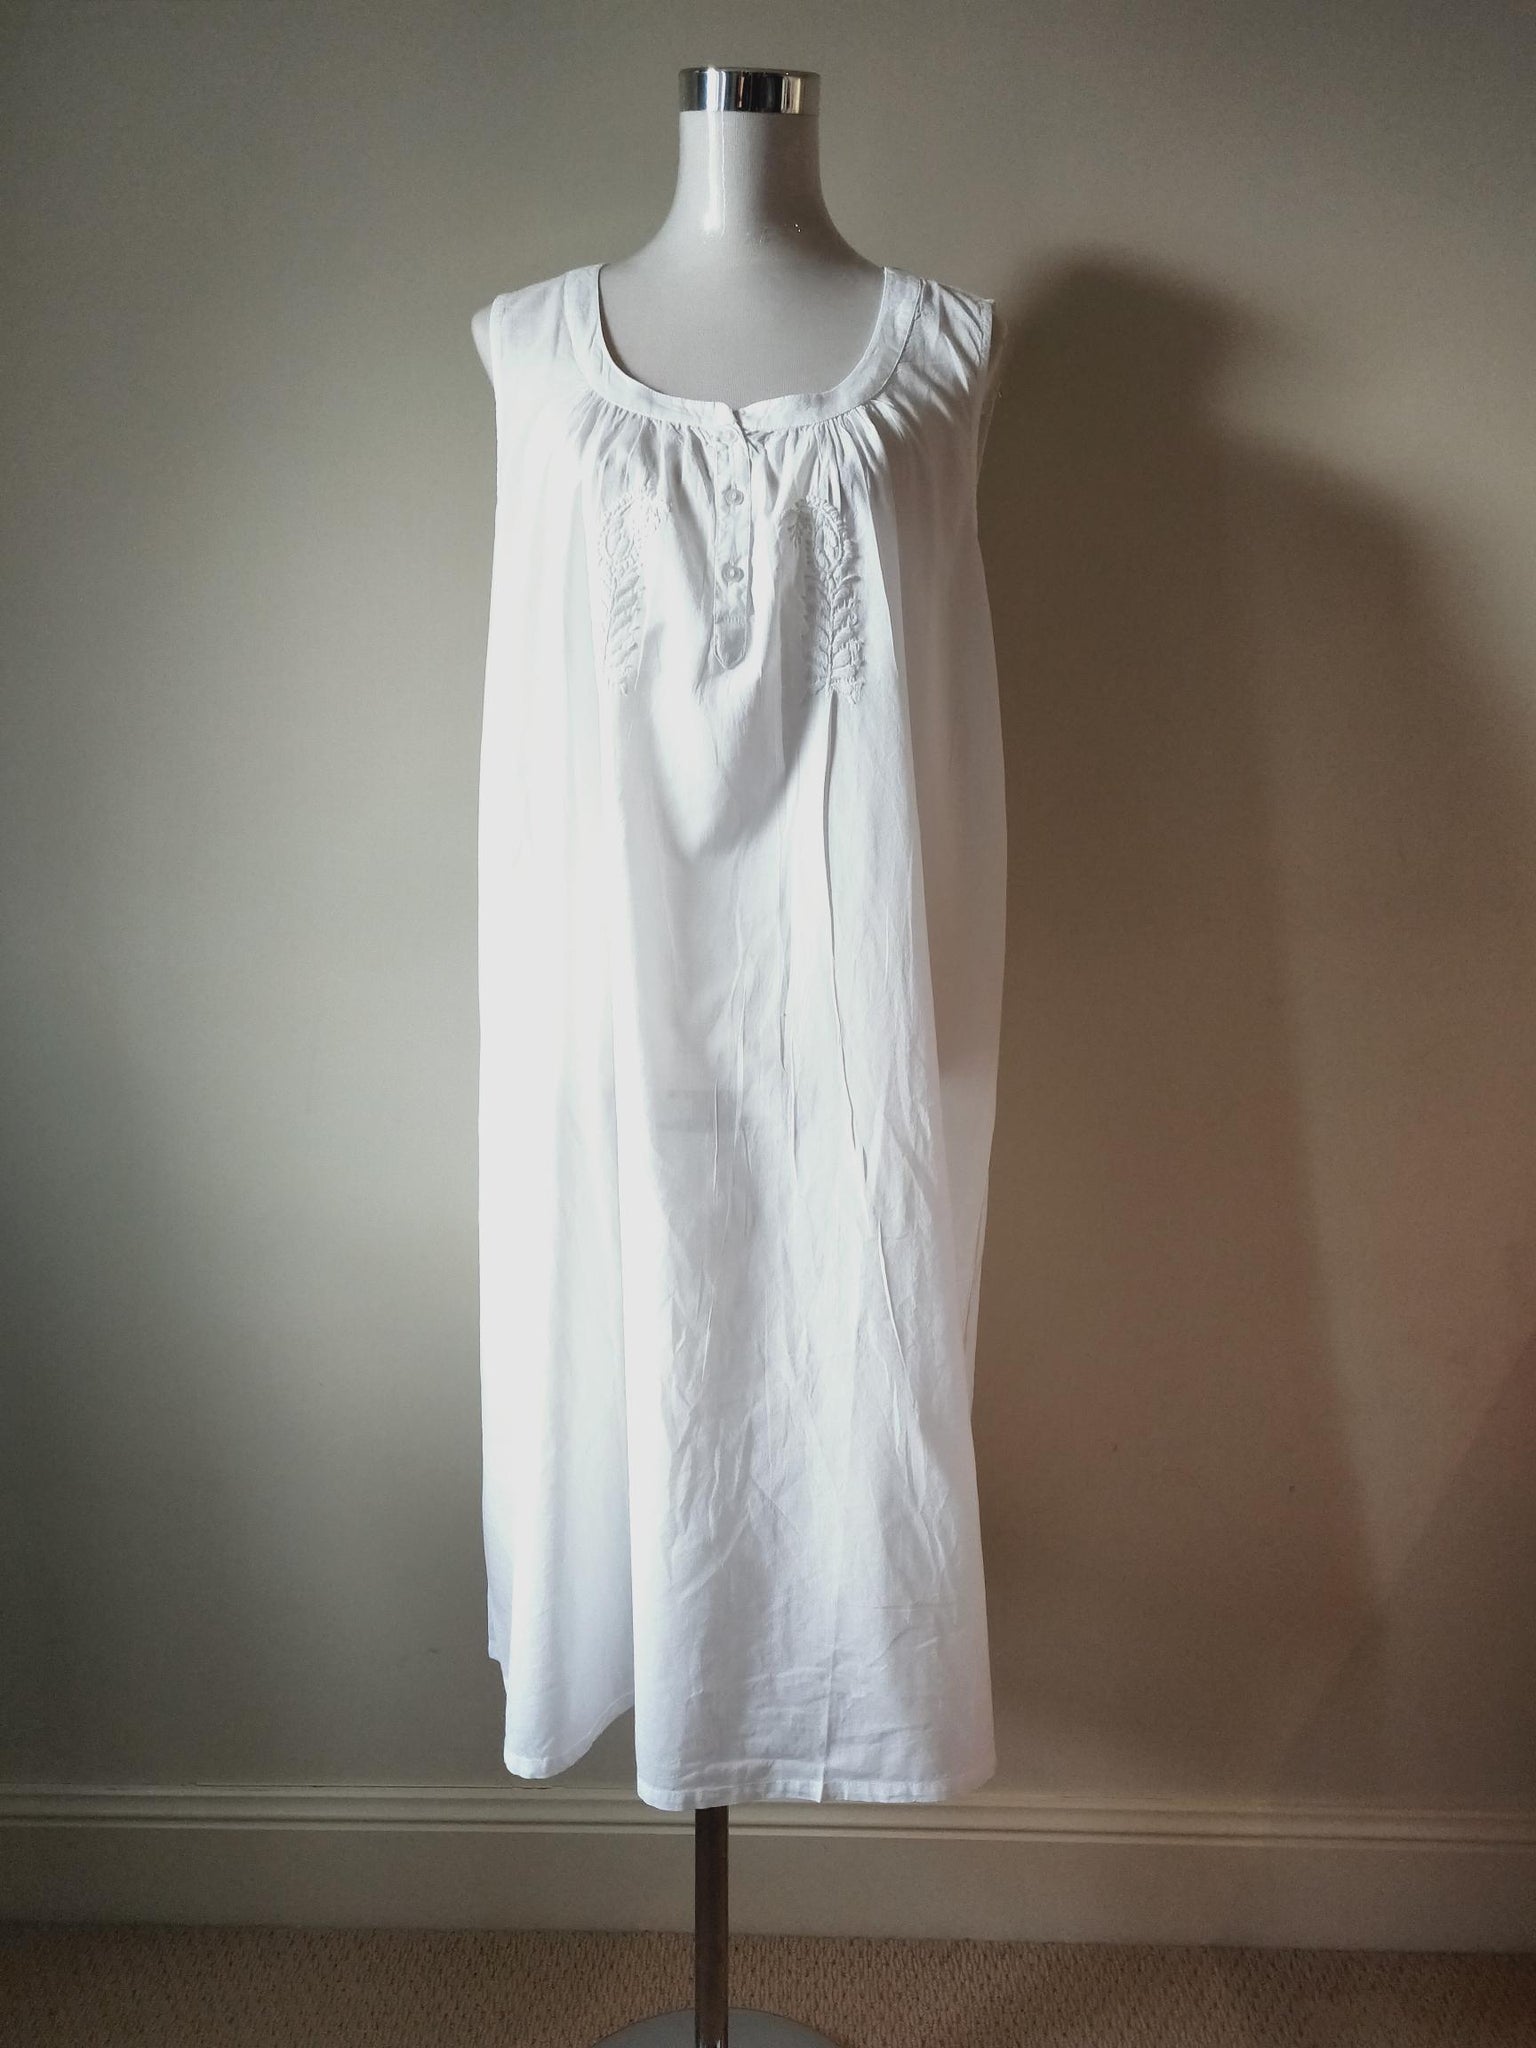 French Country Cotton Nightie FCW194V – Matilda Jane Lingerie & Sleepwear